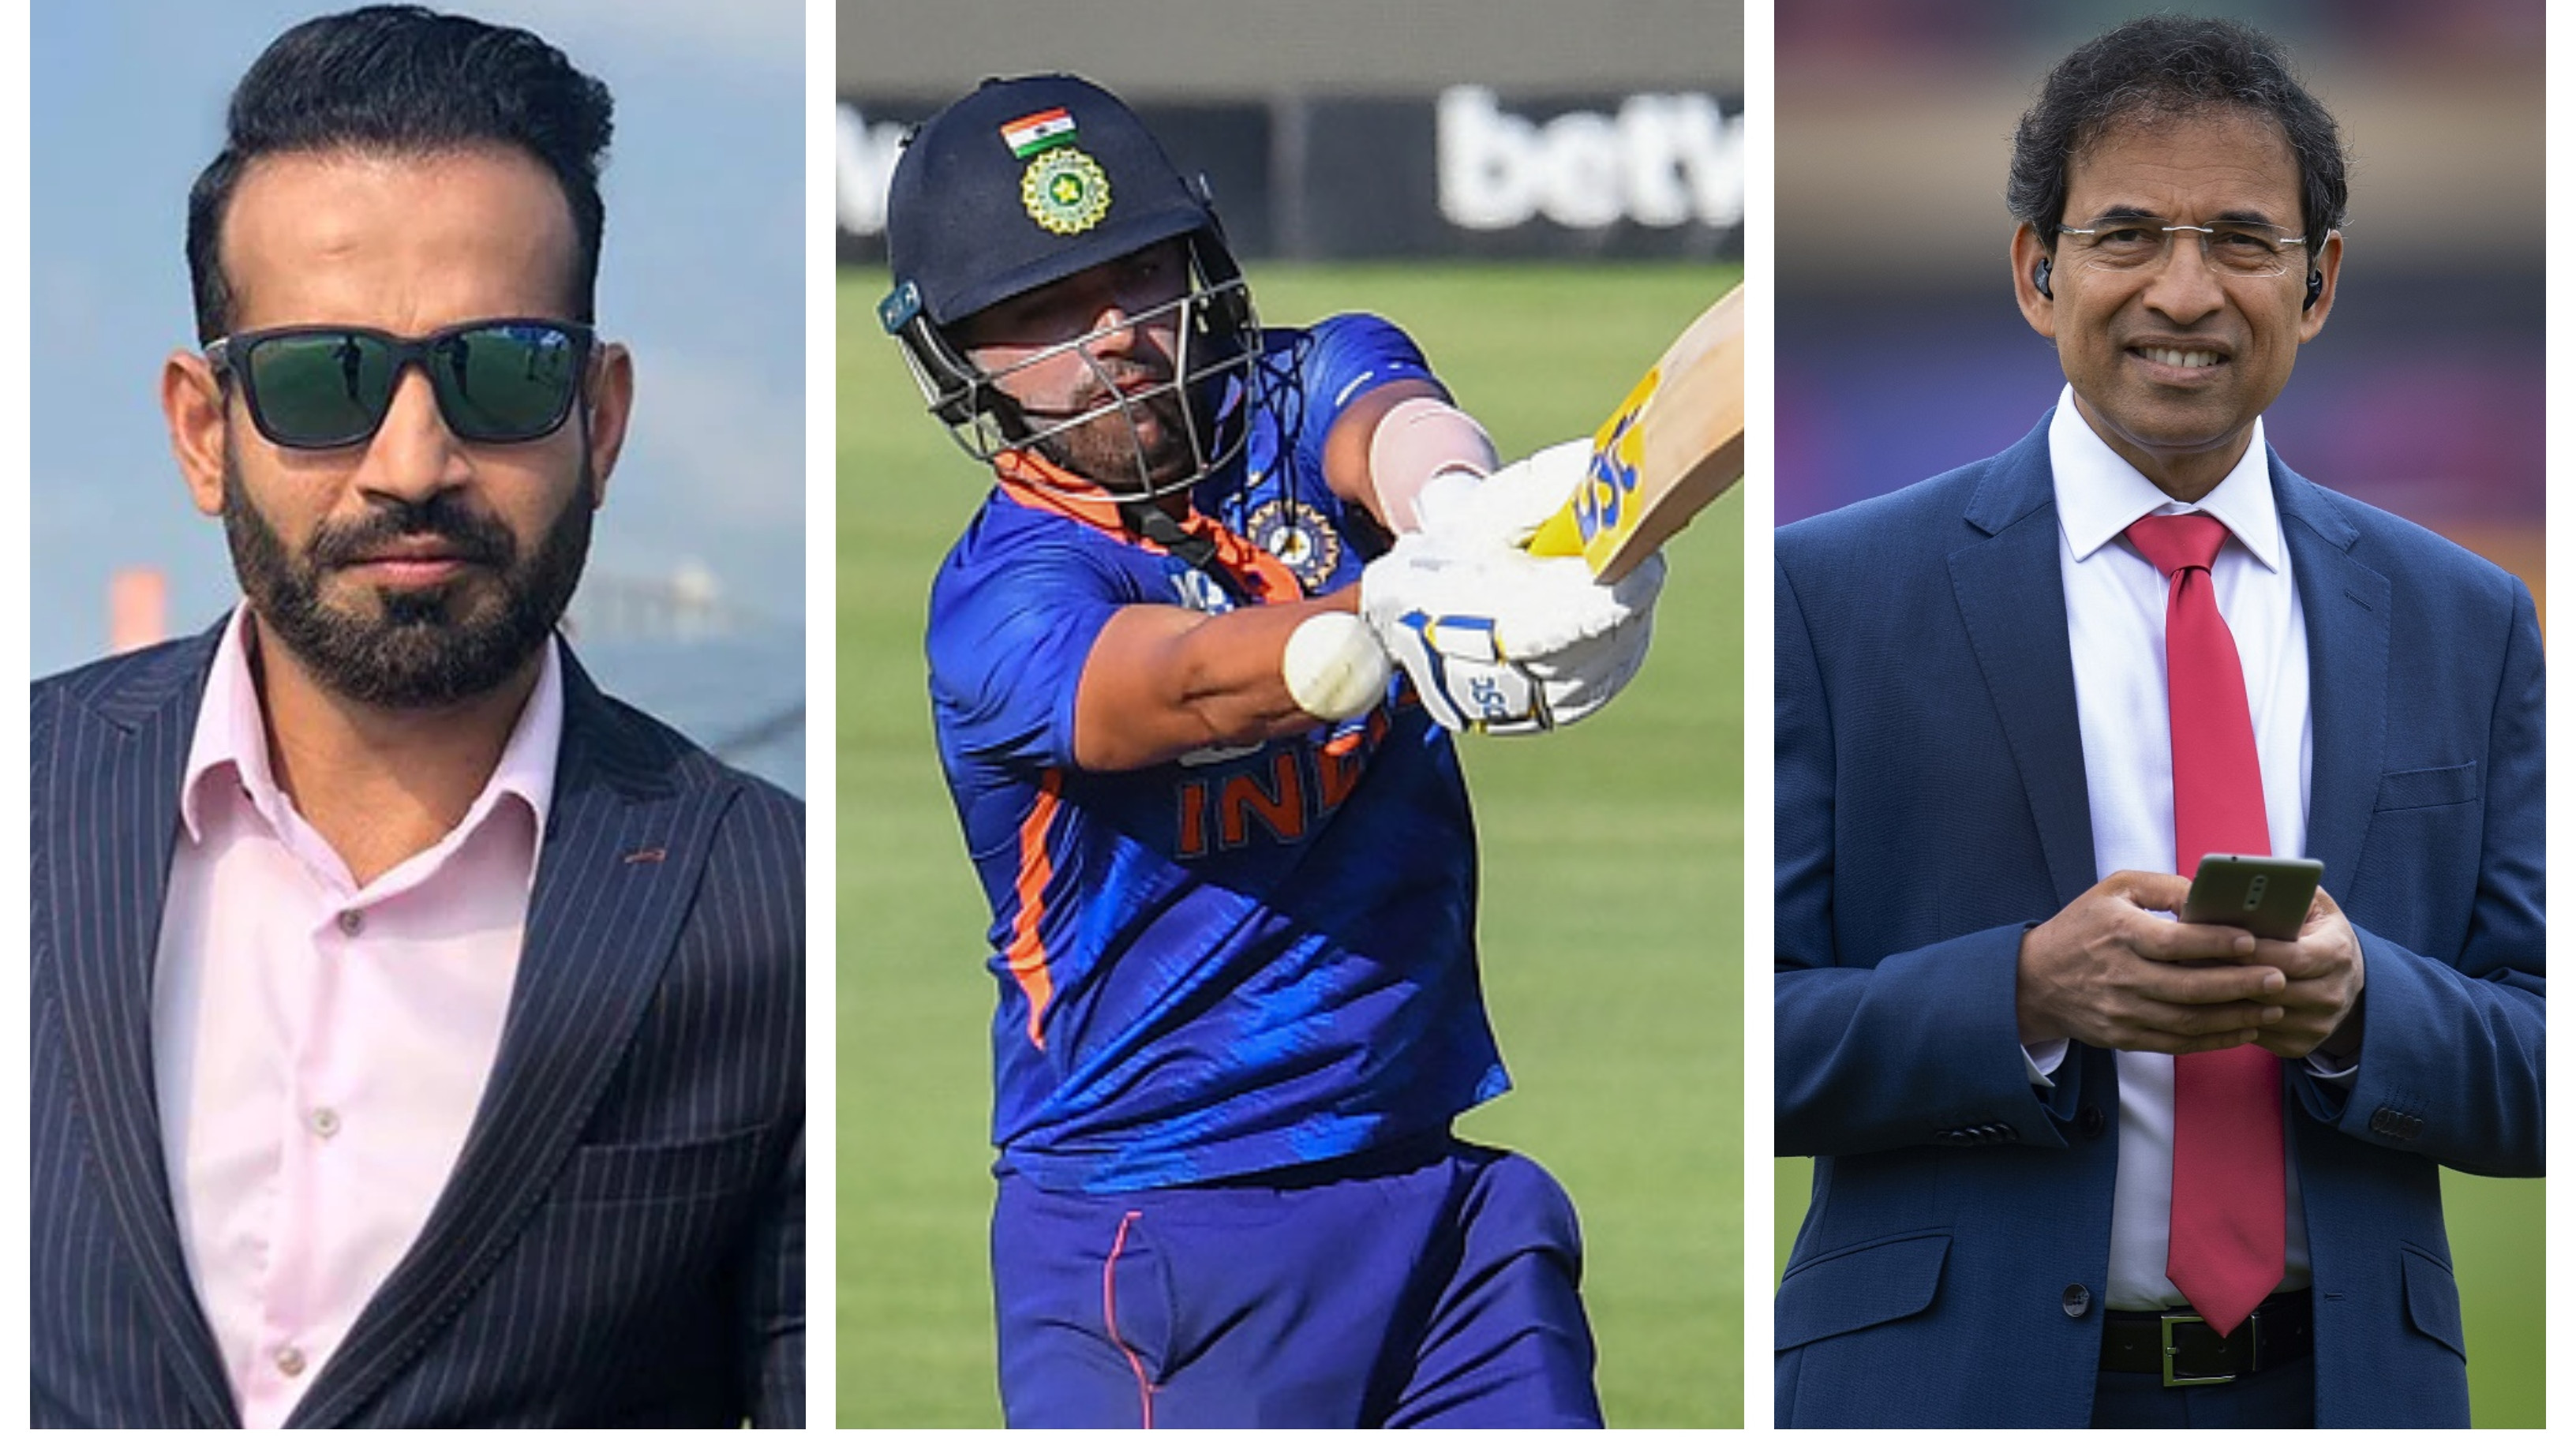 SA v IND 2021-22: Cricket fraternity reacts as India suffer 3-0 whitewash despite Deepak Chahar’s heroics